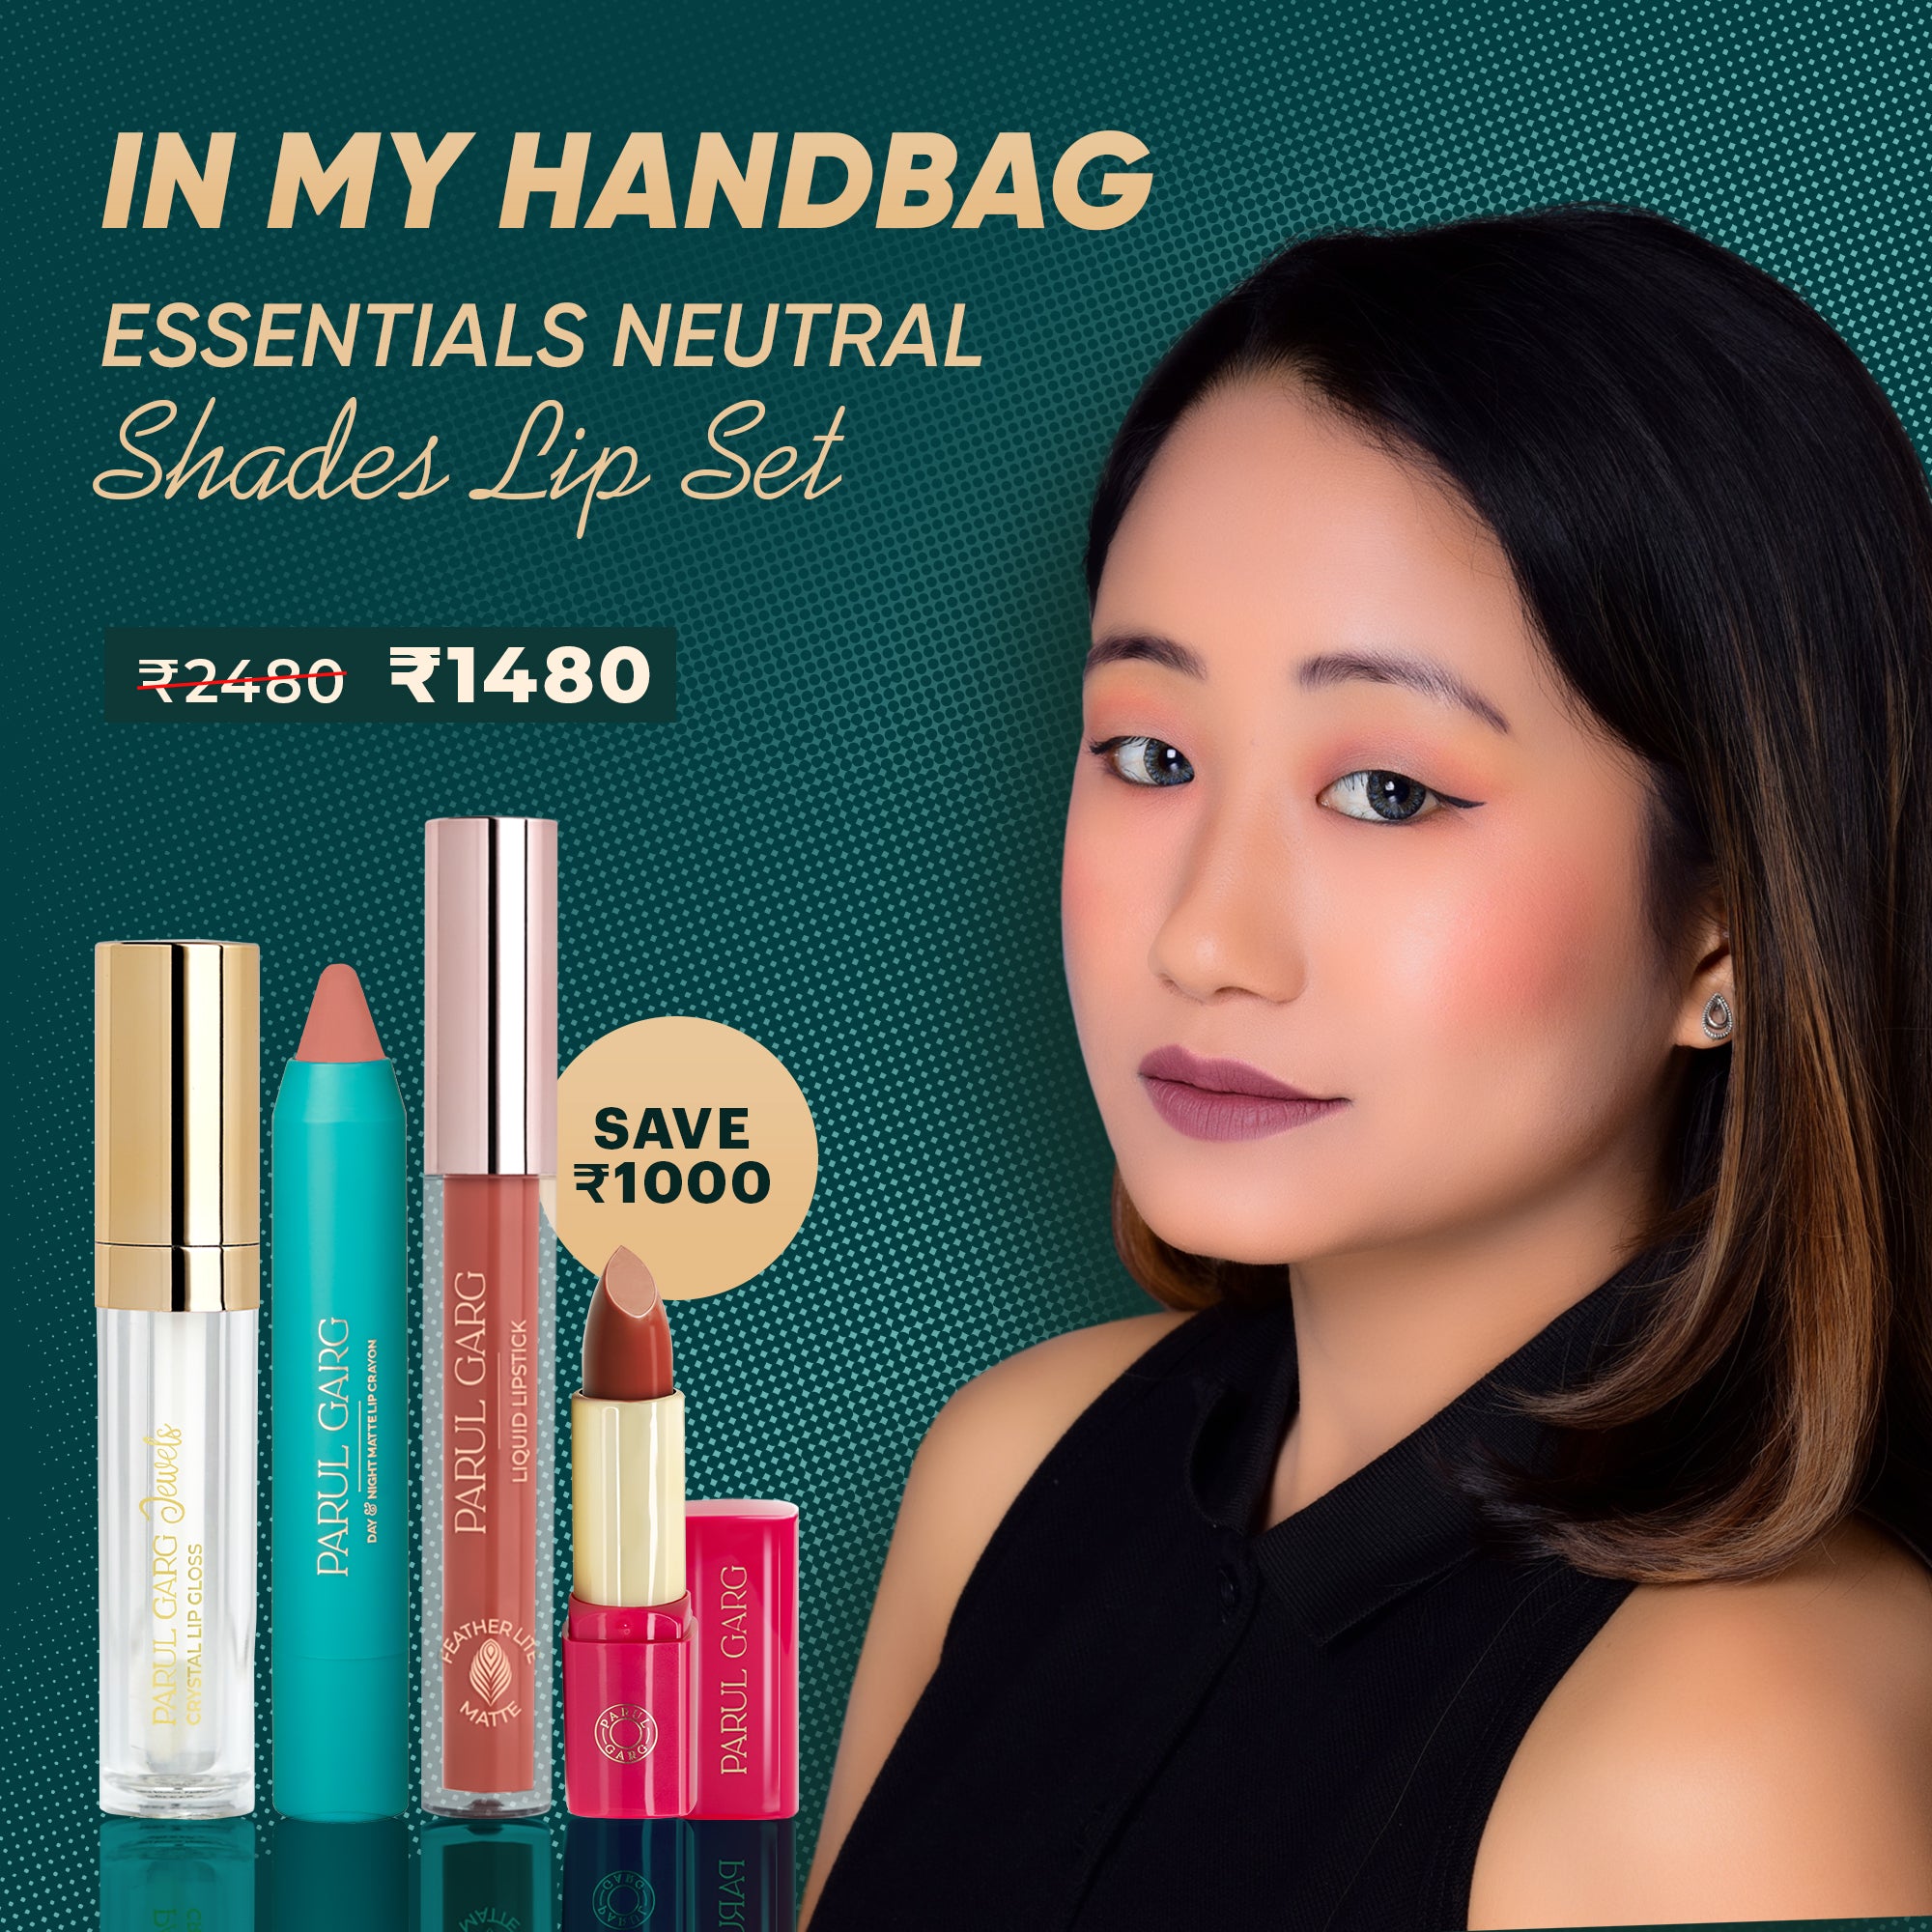 In-my Handbag: Everyday Purse Essentials Neutral Shades Lip Set